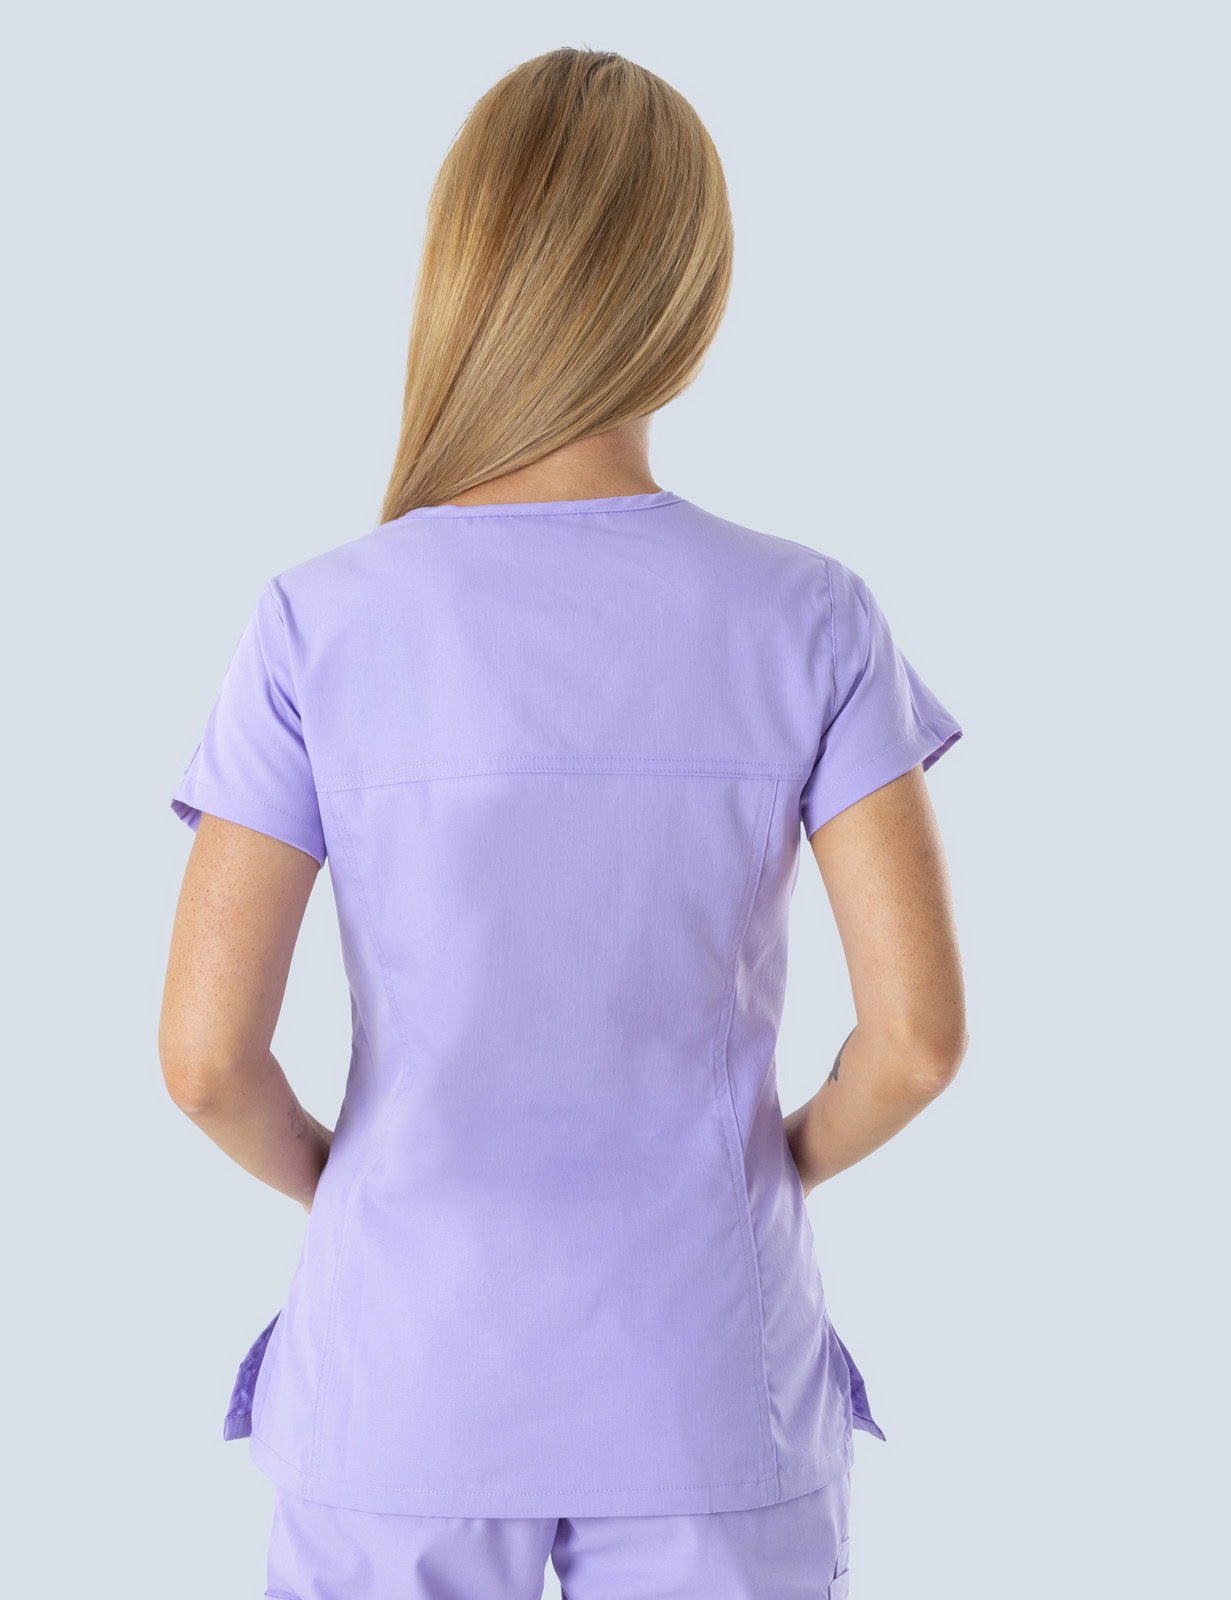 Queensland Children's Hospital Emergency Department Nurse Practitioner Uniform Top Bundle  (Women's Fit Top in Lilac incl Logos)